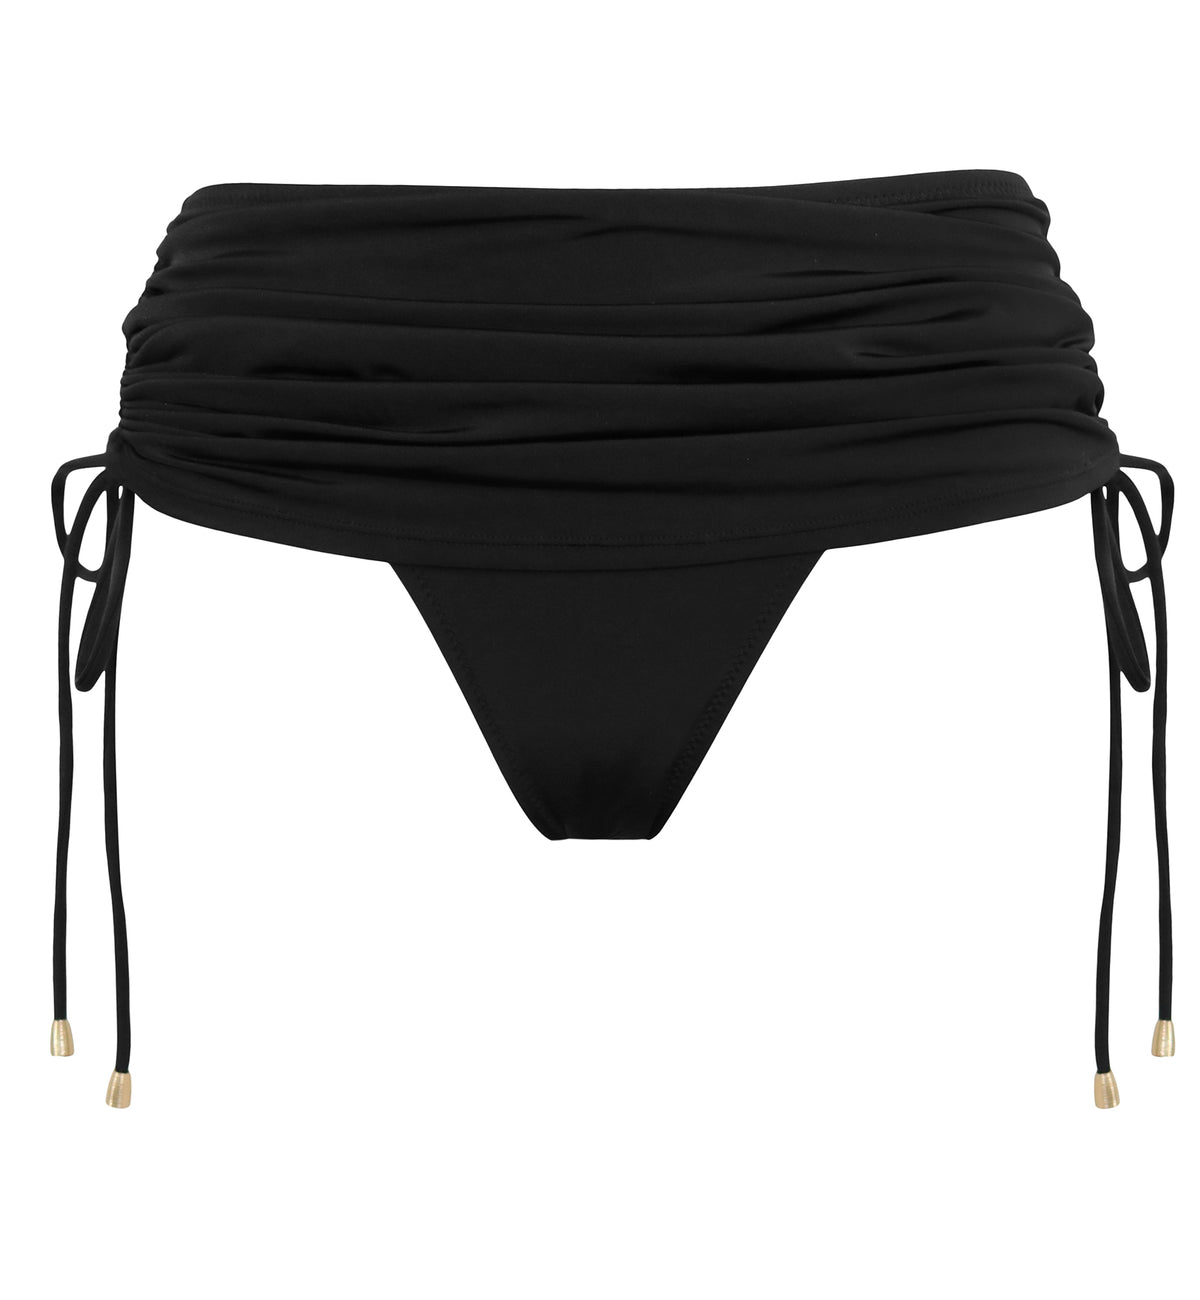 Pour Moi Santa Cruz Adjustable Skirt Swim Brief (24904),Small,Black - Black,Small